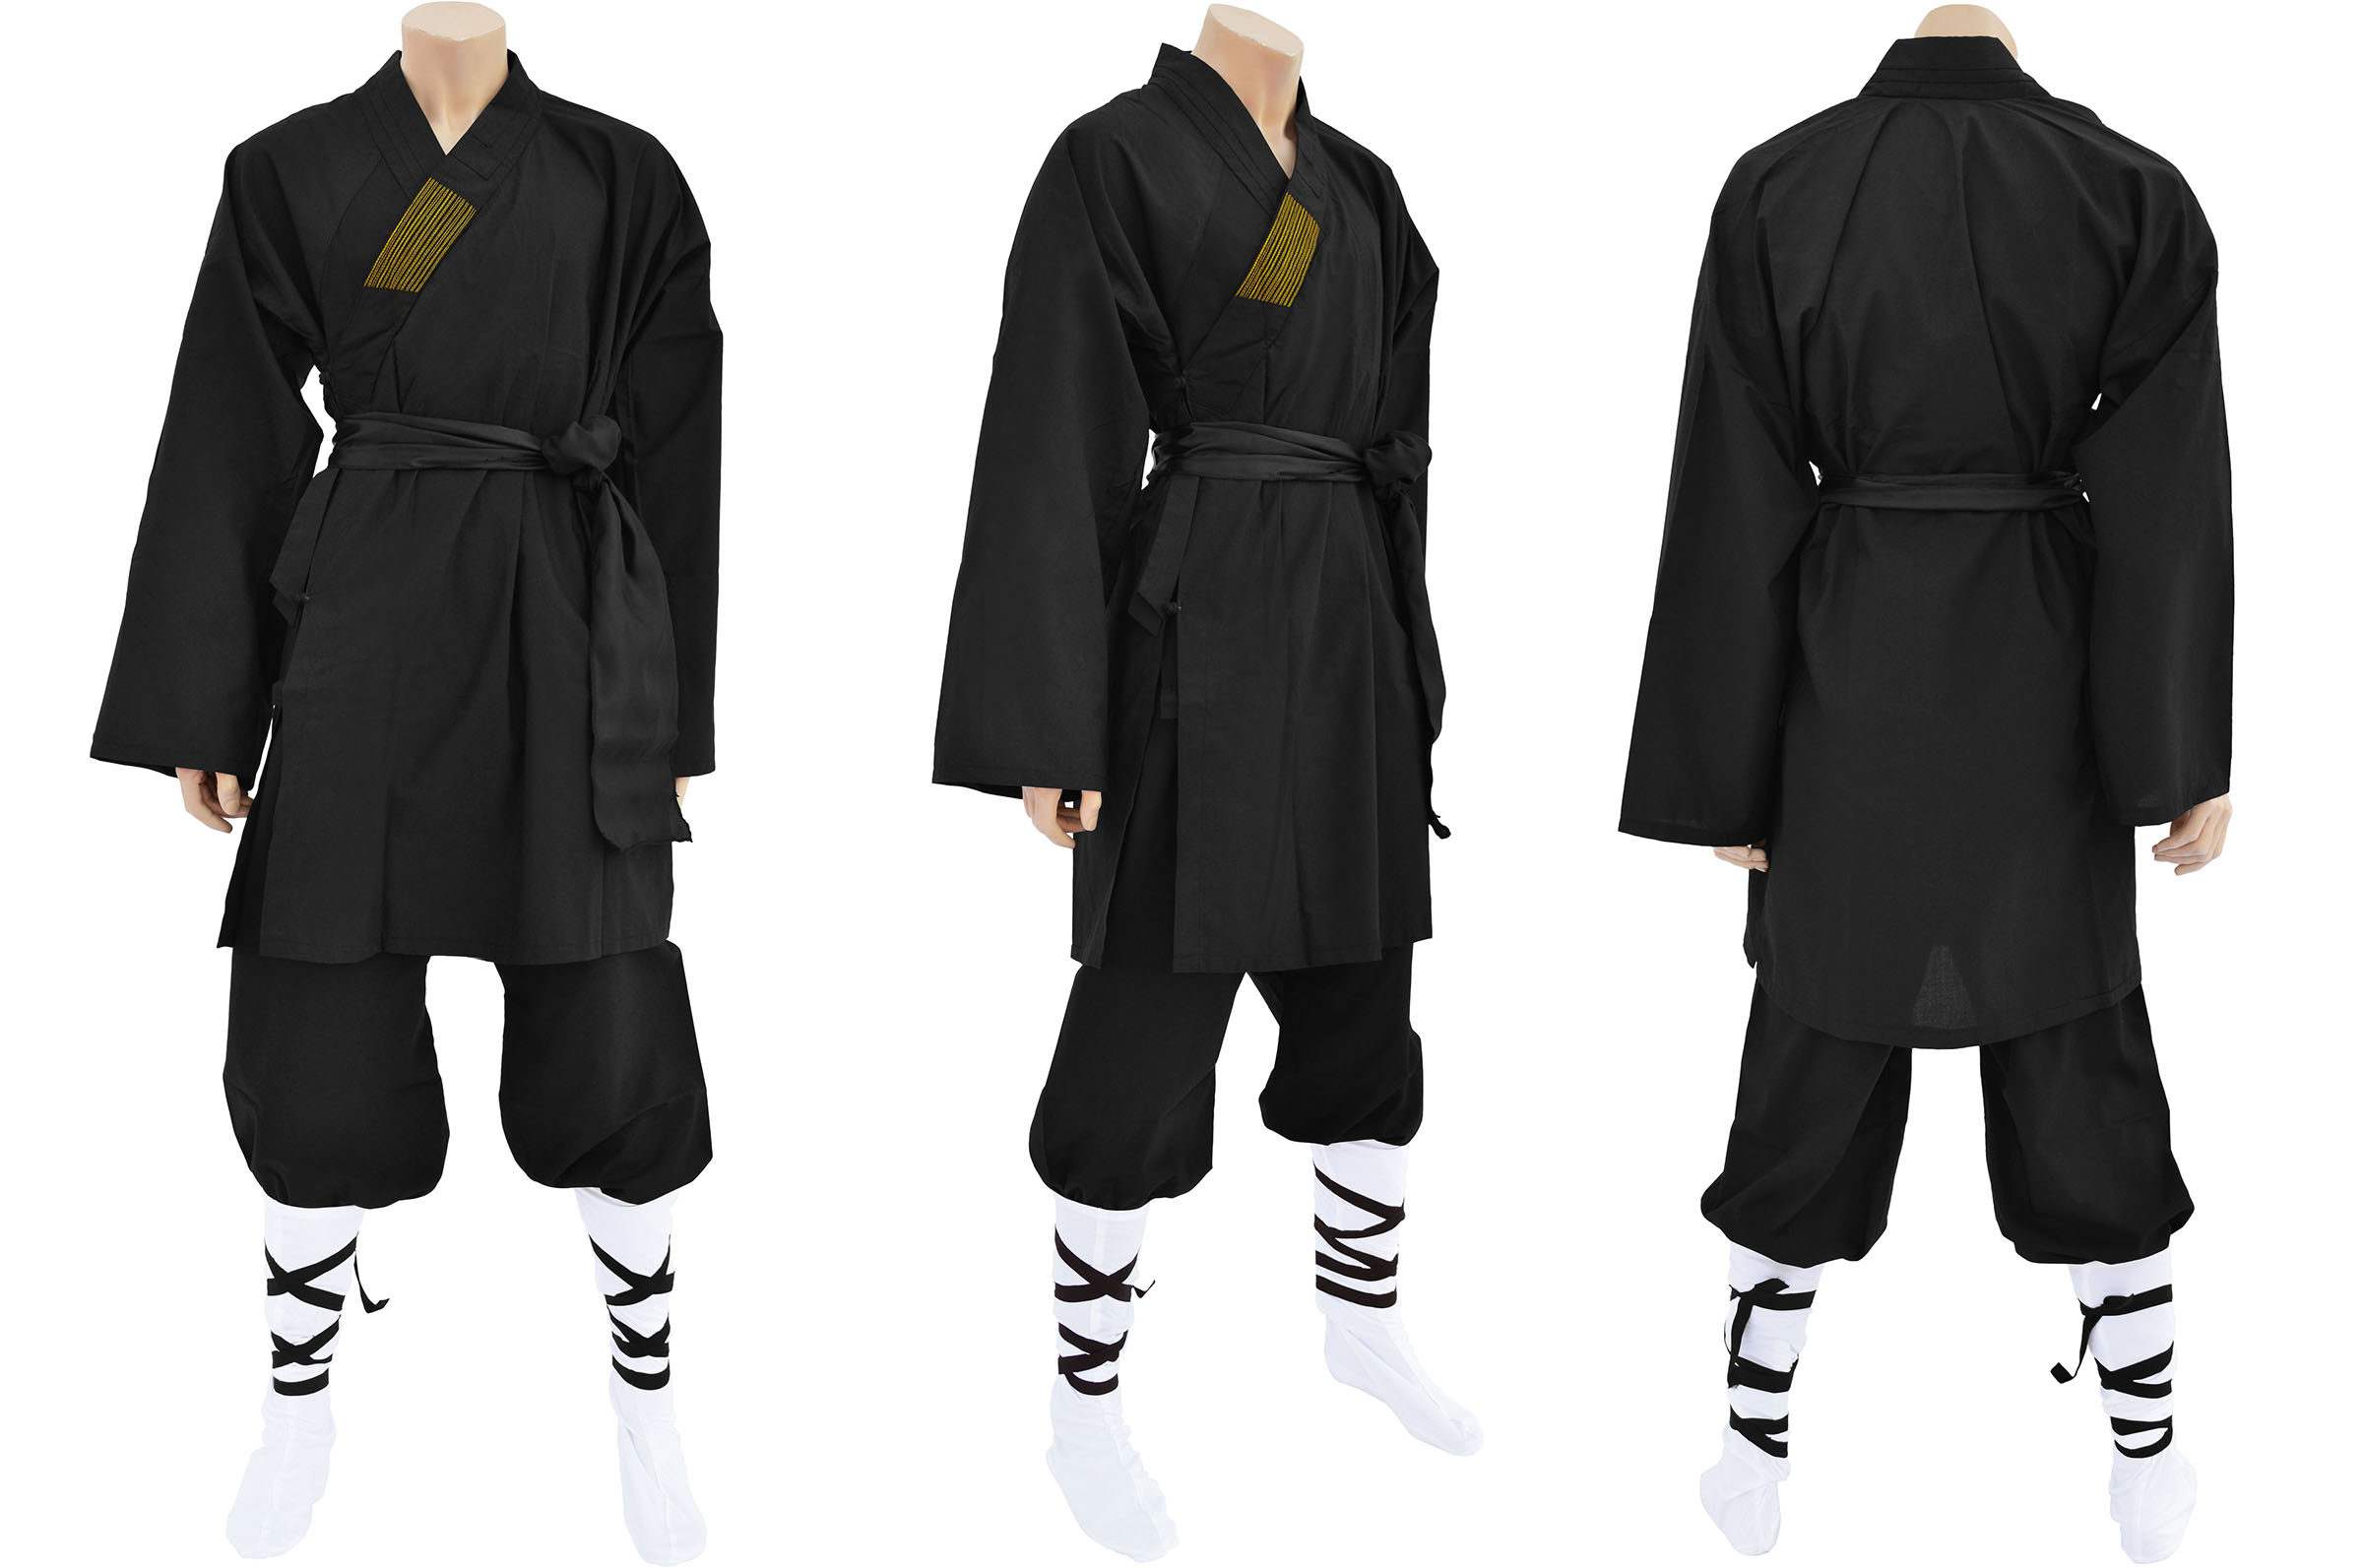 Disminución histórico Abiertamente Shaolin Uniform, Black Cotton - DragonSports.eu